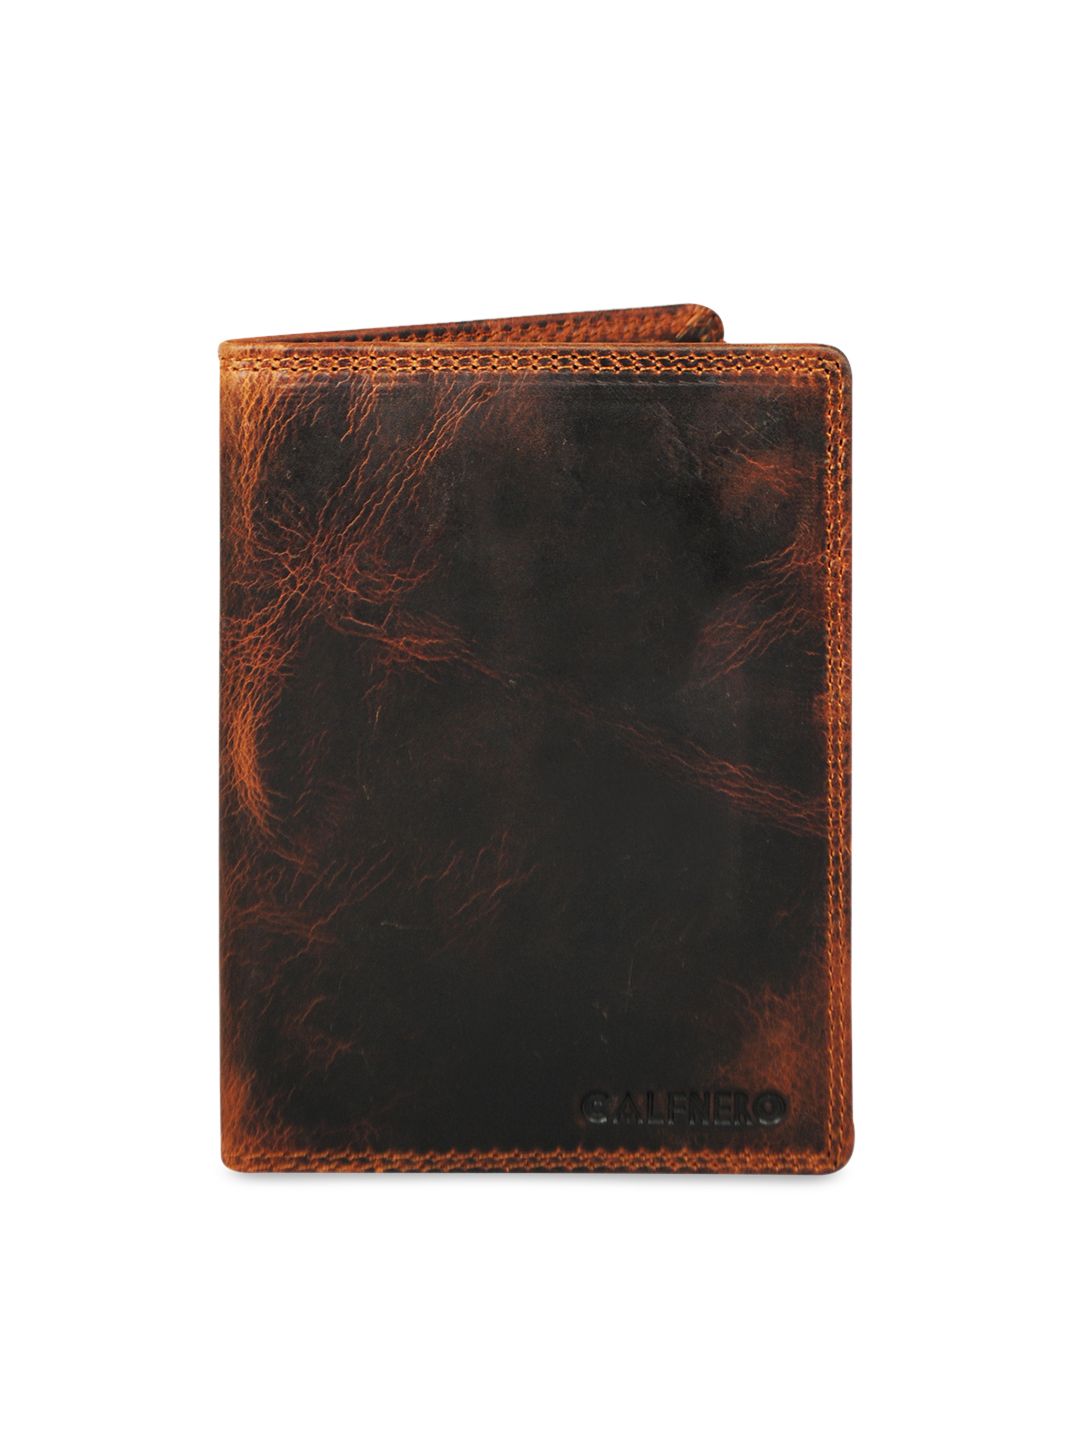 CALFNERO Unisex Brown Solid Leather Passport Holder Price in India